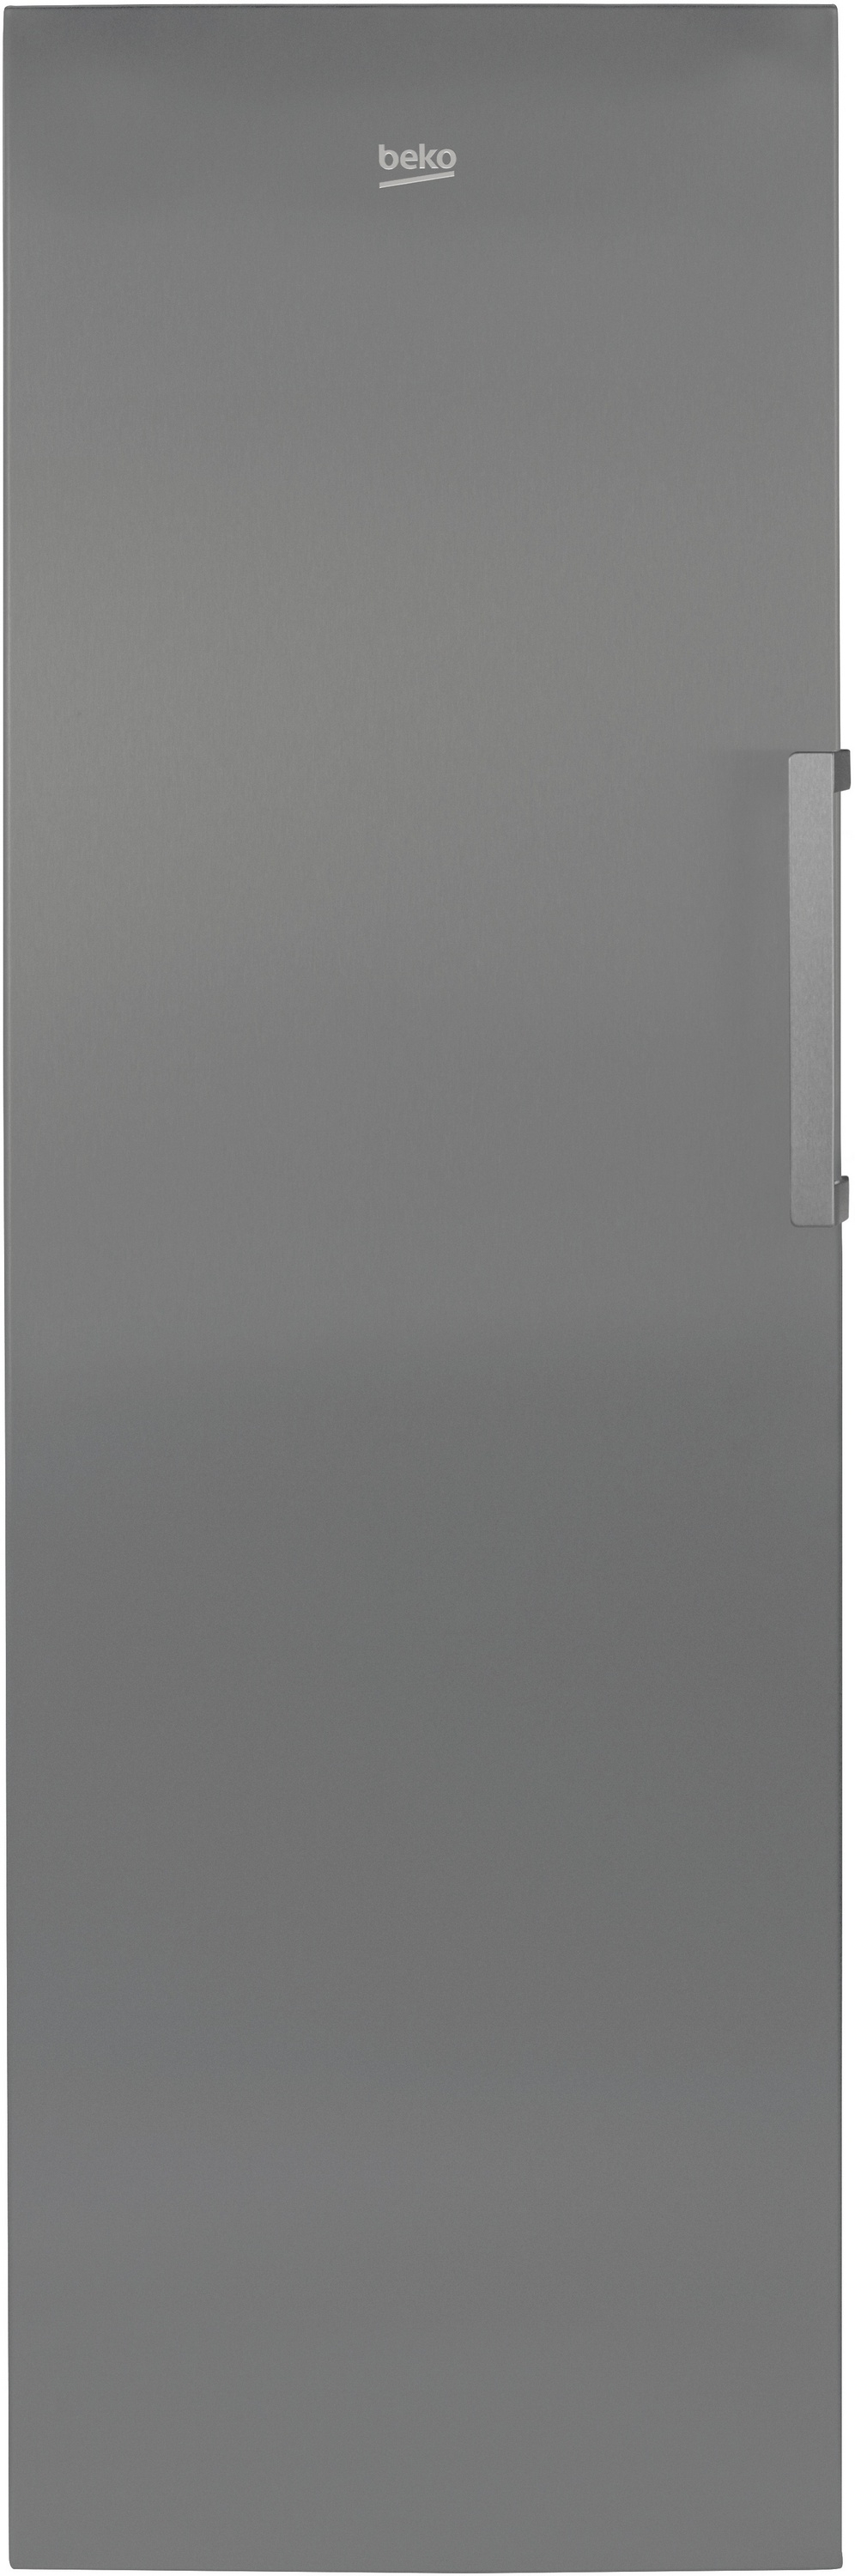 Beko FRFP1685X Freestanding Tall Frost Free Freezer-Stainless Steel